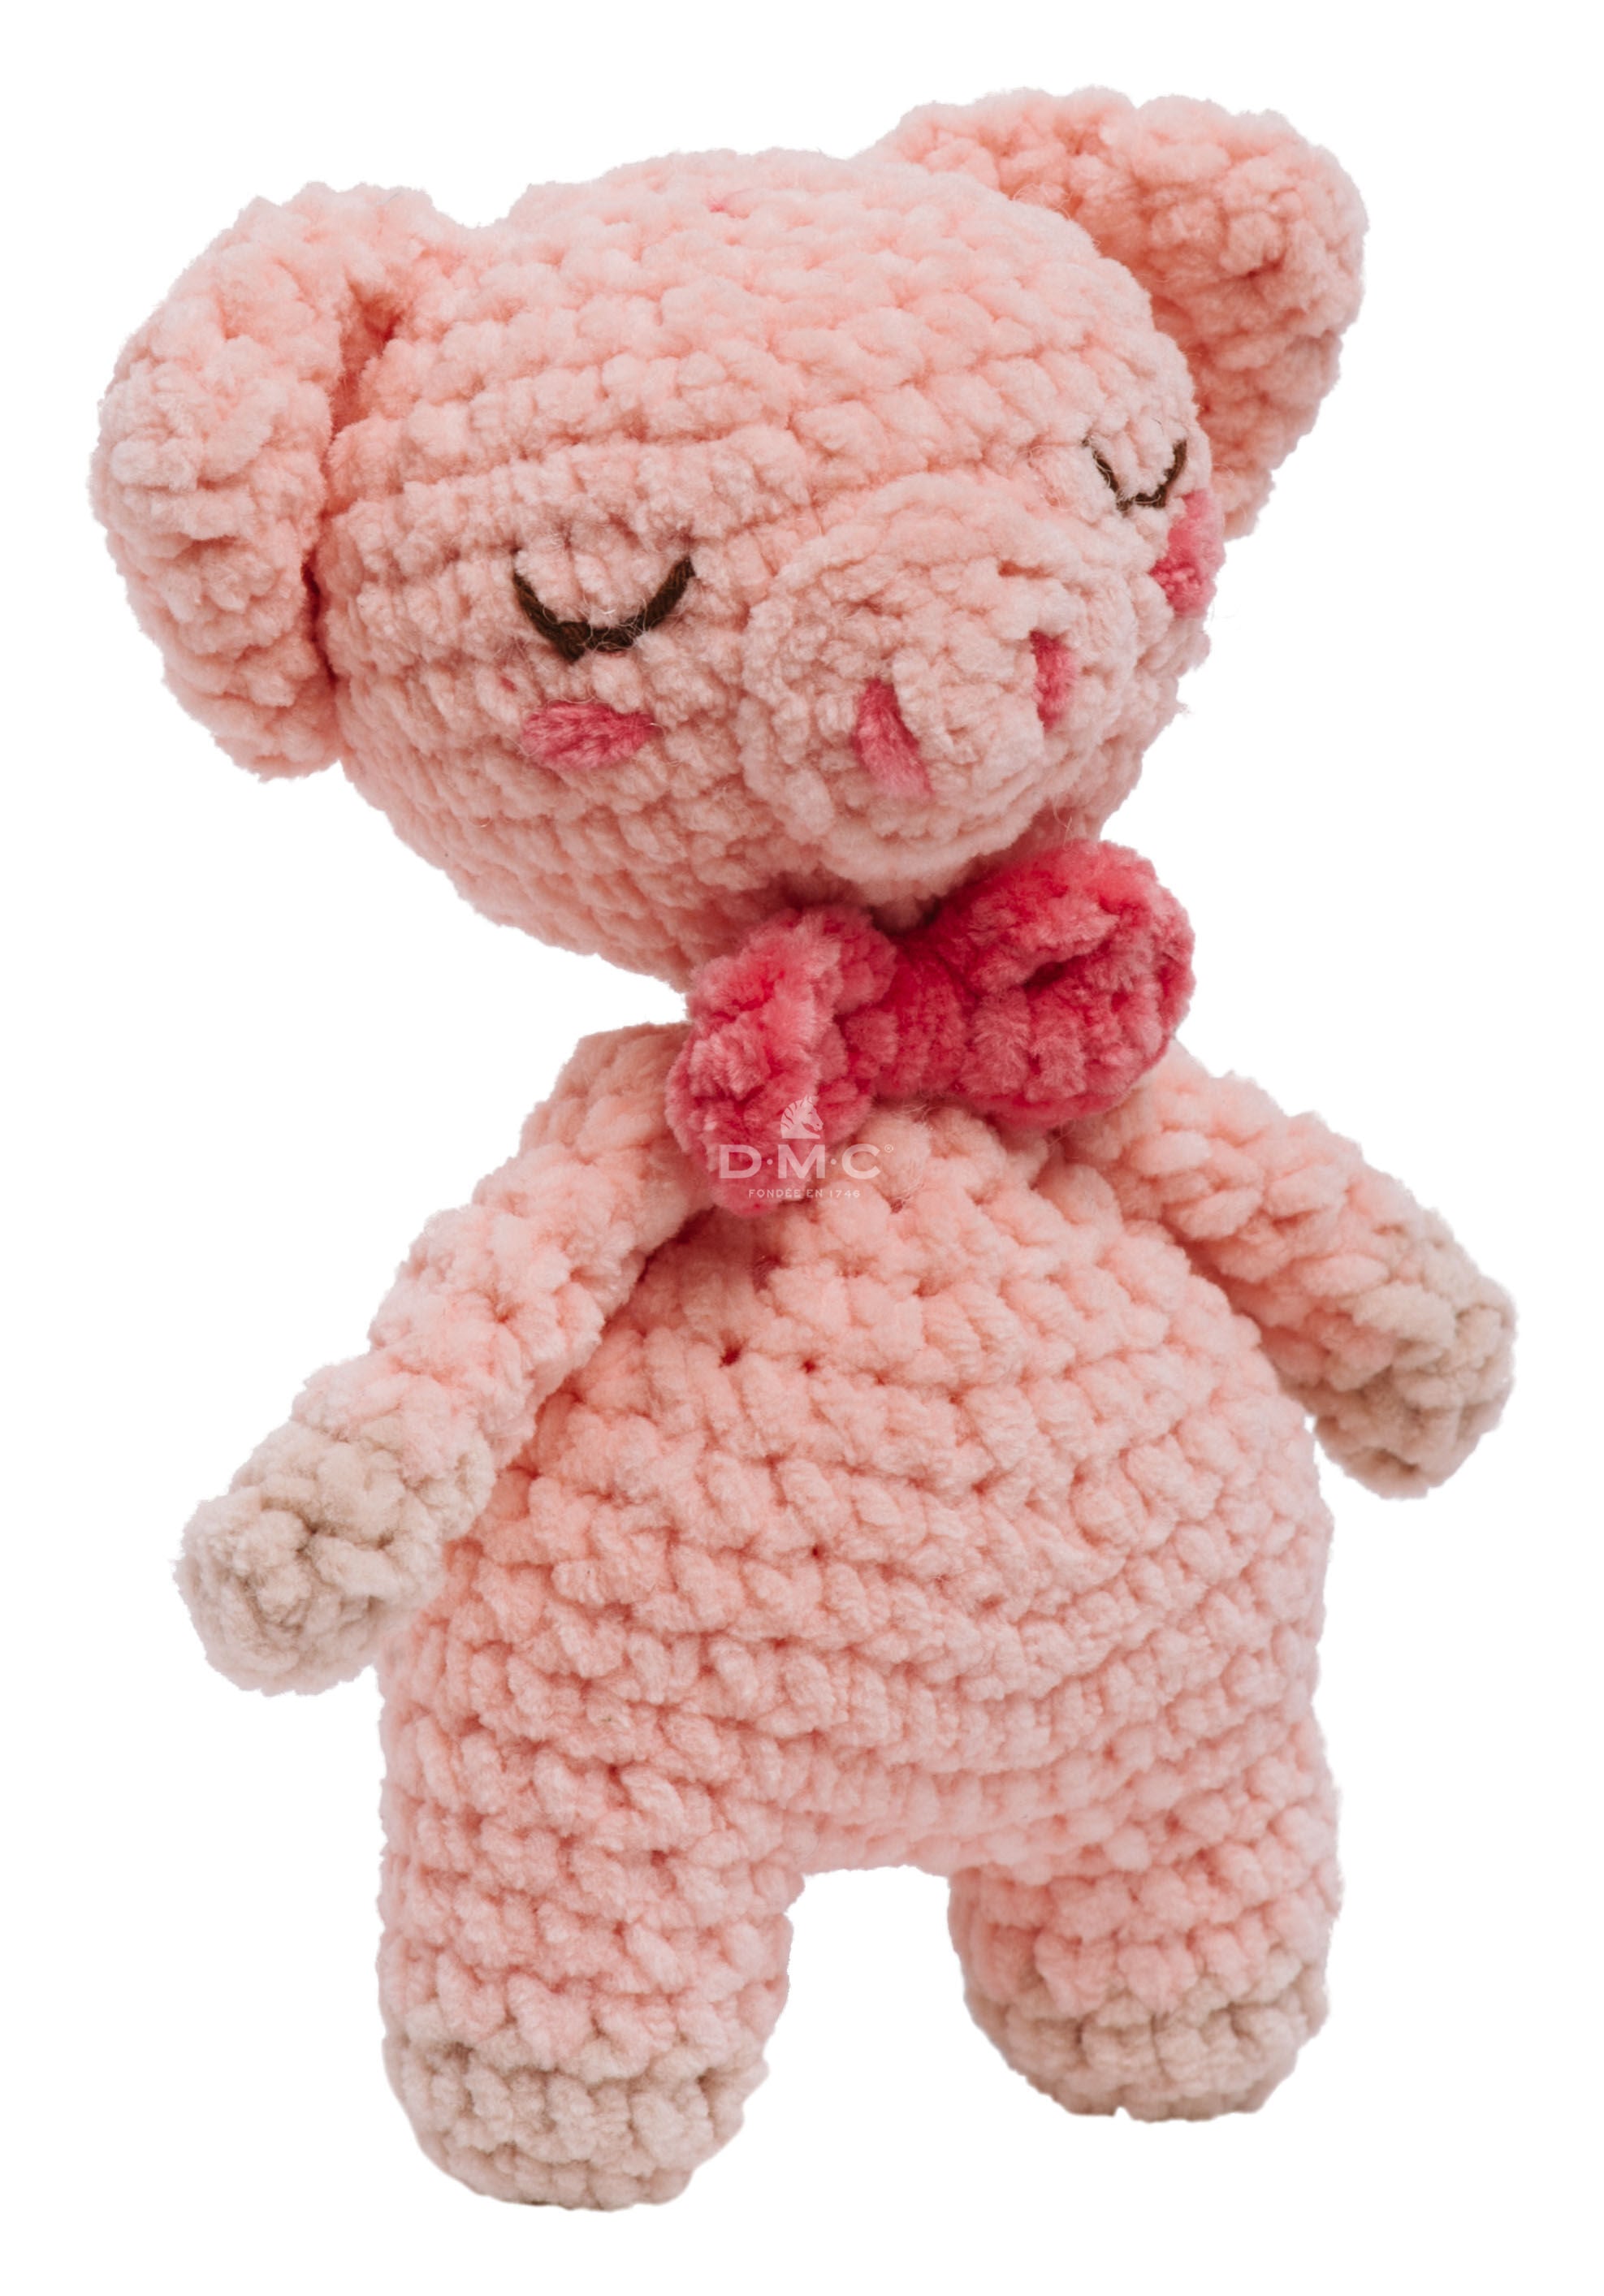 Fil DMC Crochet tricot Happy Chenille - Tissus des Ursules